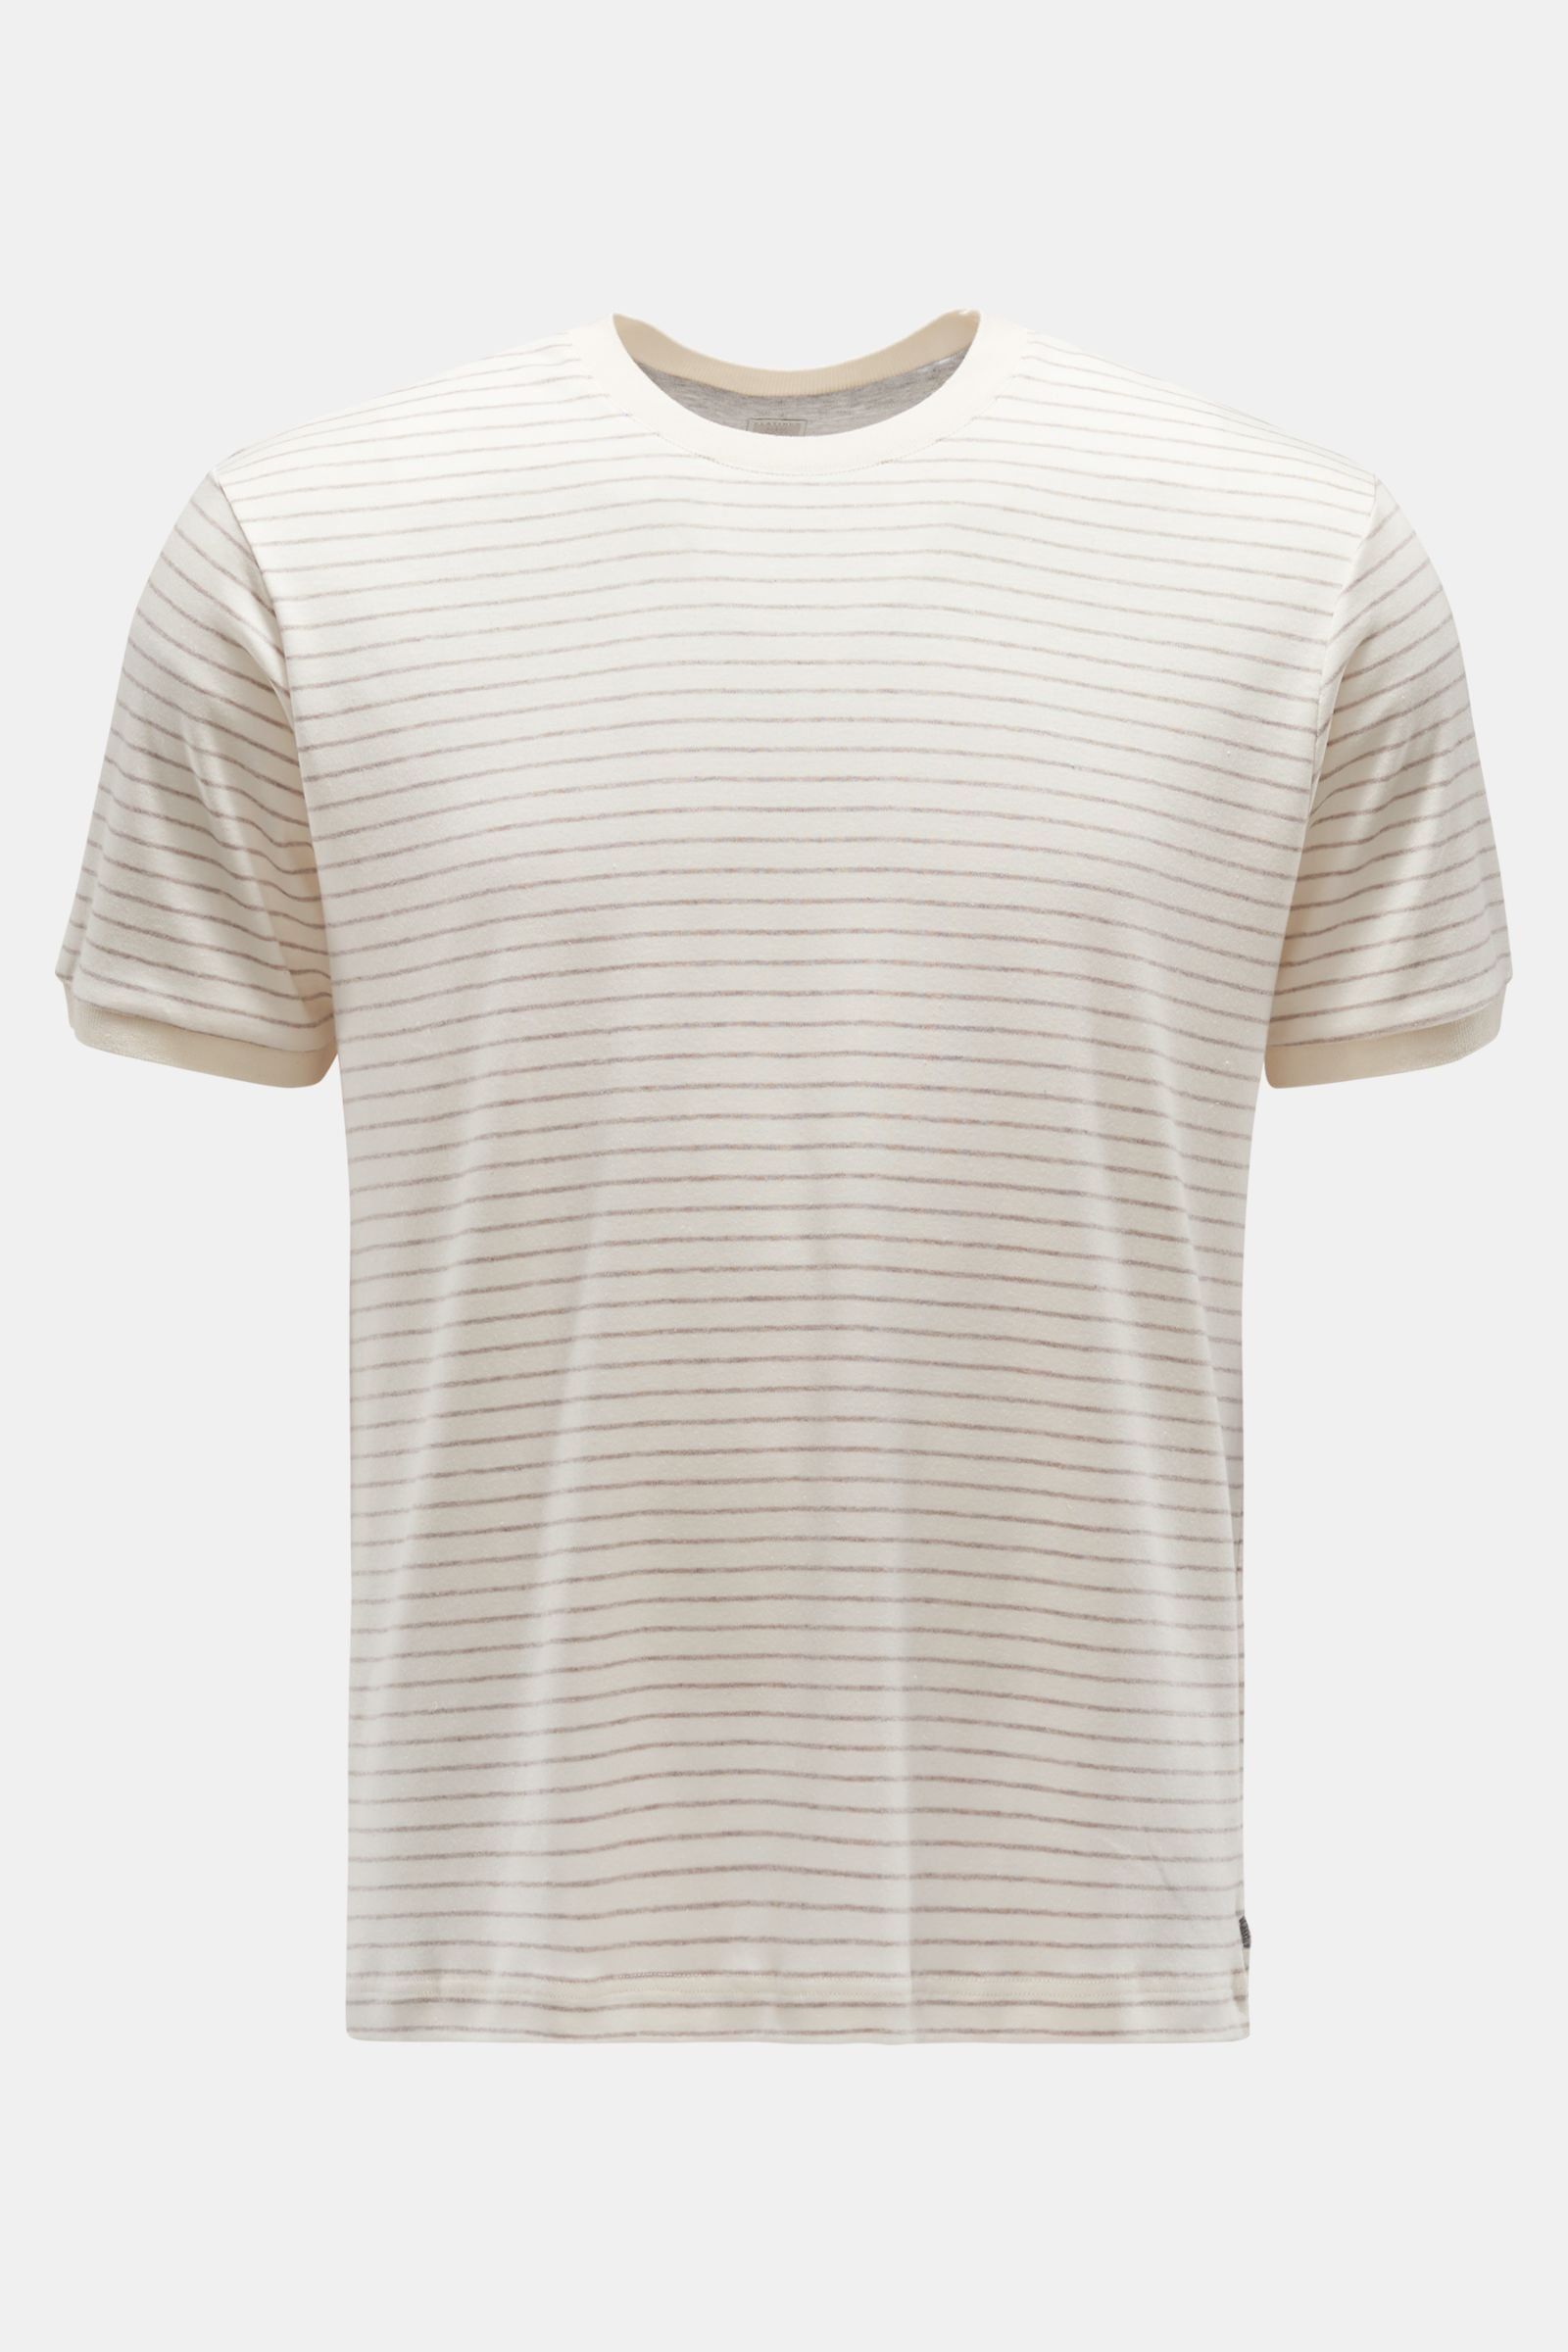 Crew neck T-shirt cream/grey-brown striped